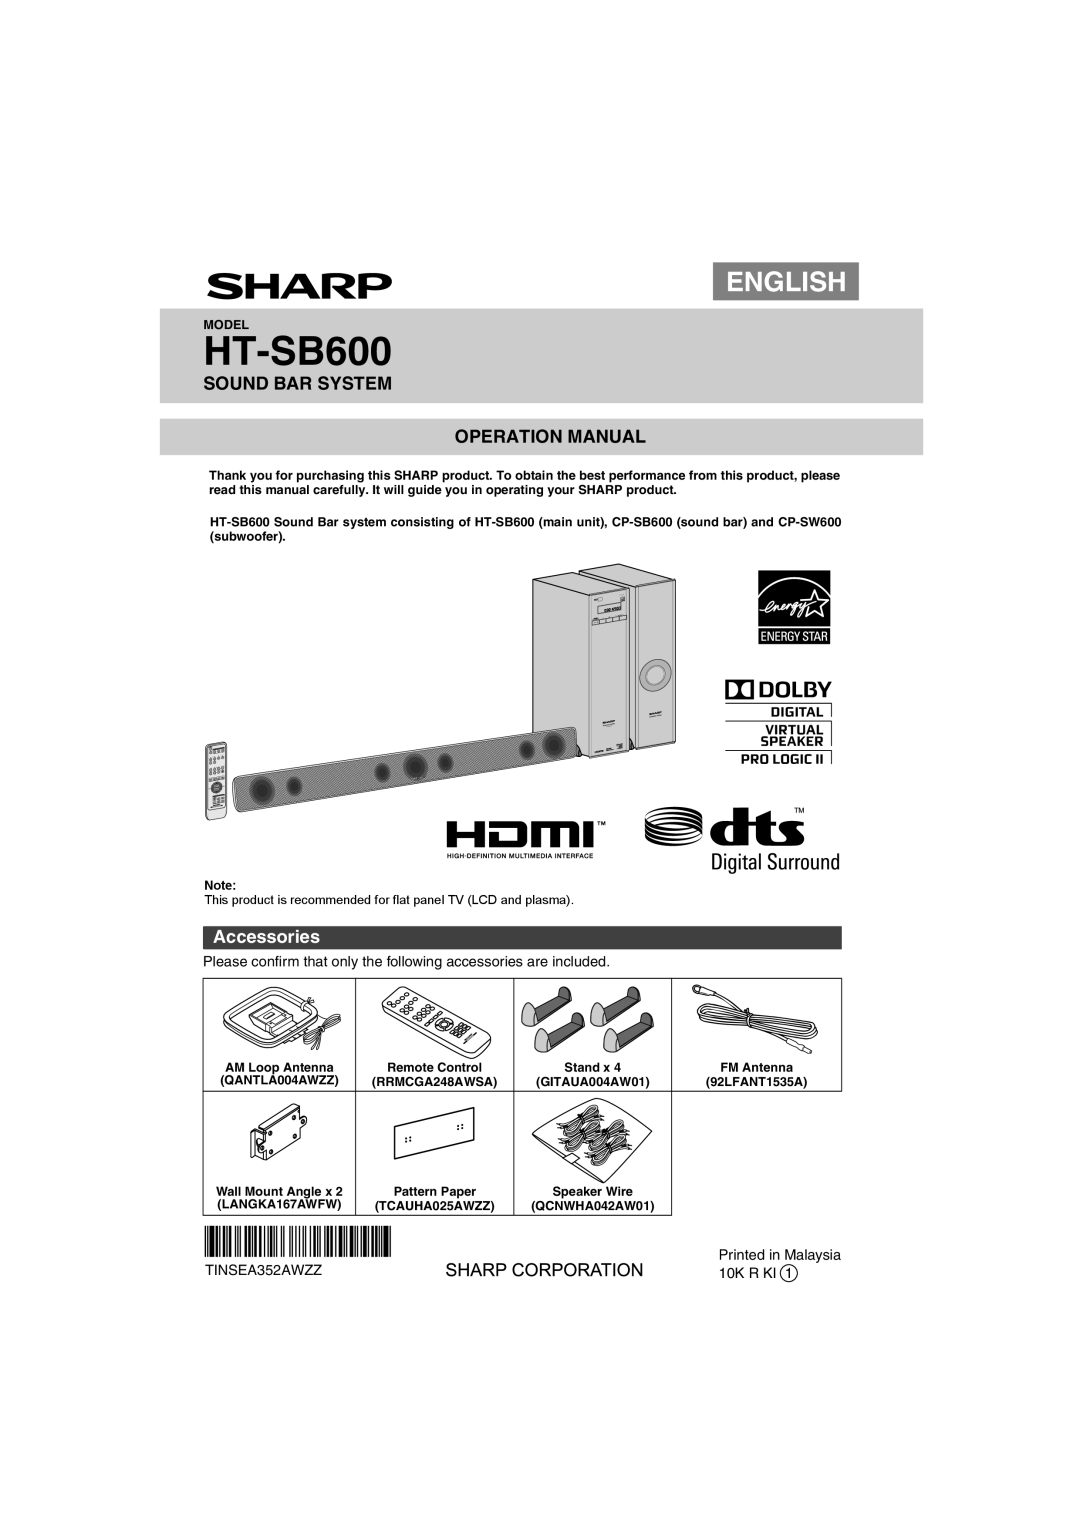 Sharp HTSB600 operation manual Accessories, HT-SB600, English, TINSEA352AWZZ 